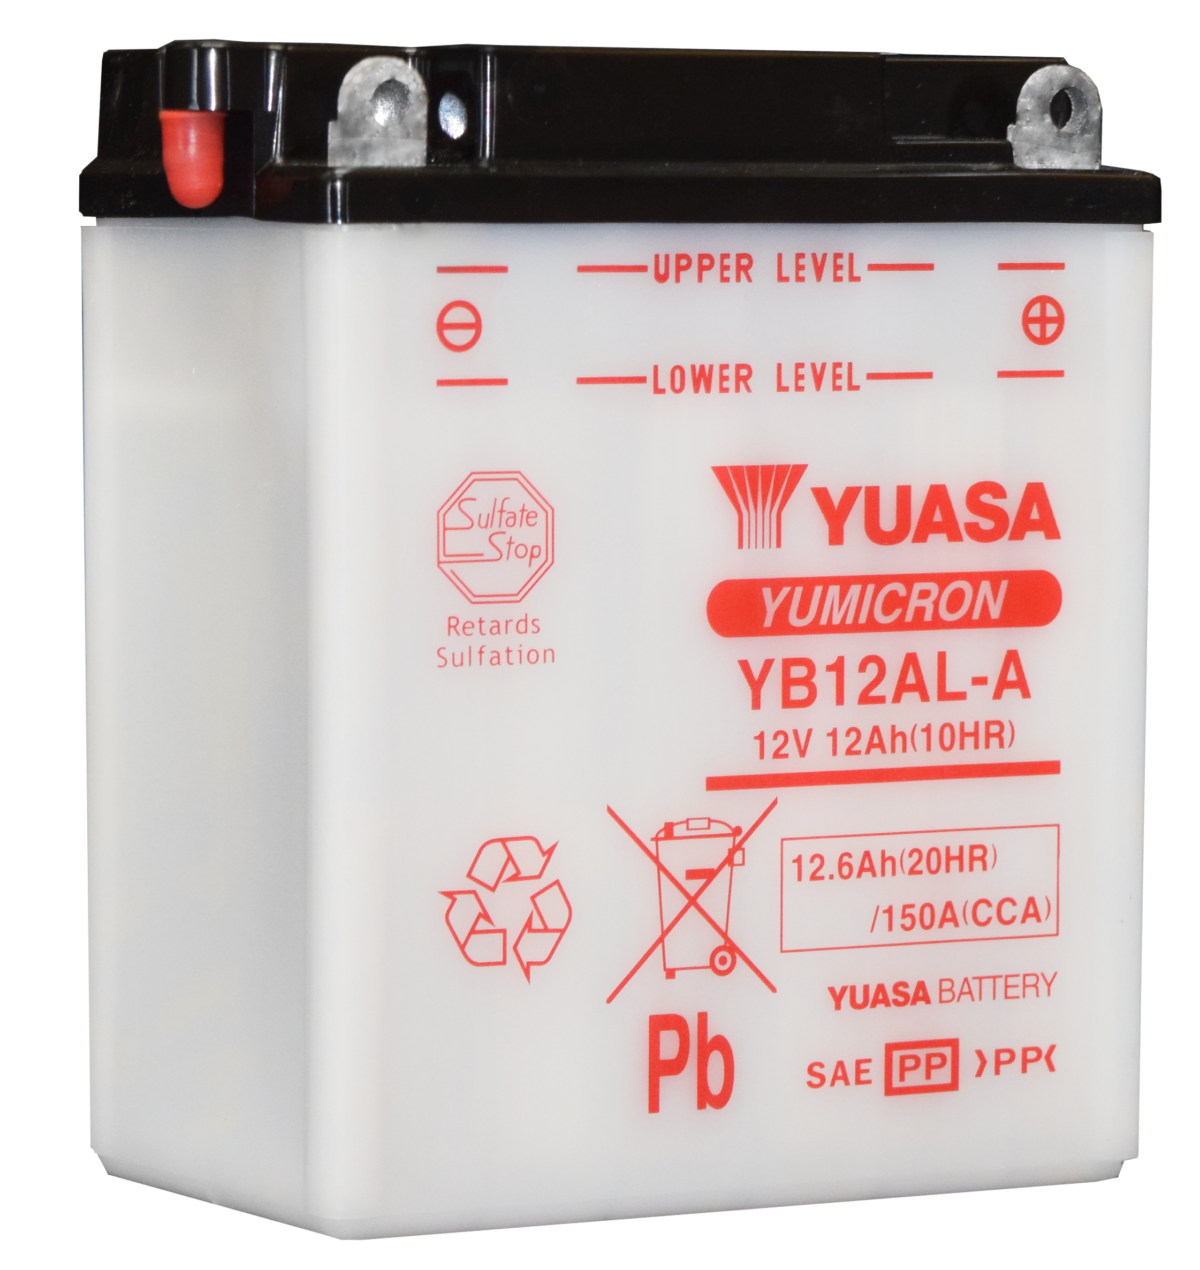 Yuasa YB12AL-A Yumicron Battery for motorsports, powersports, and motorcycle